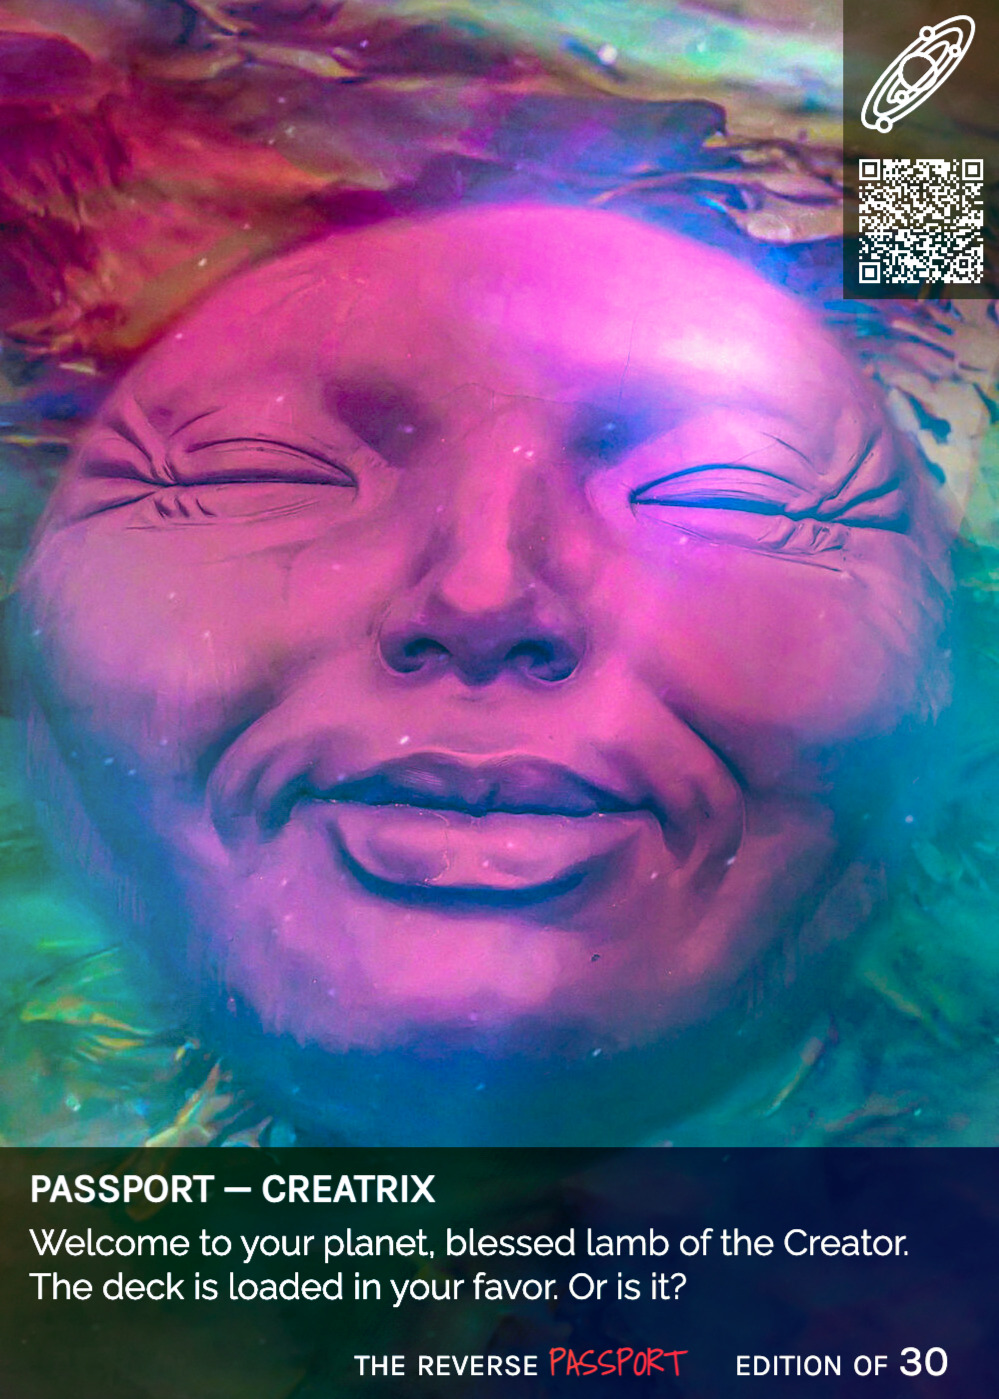 Passport — Creatrix